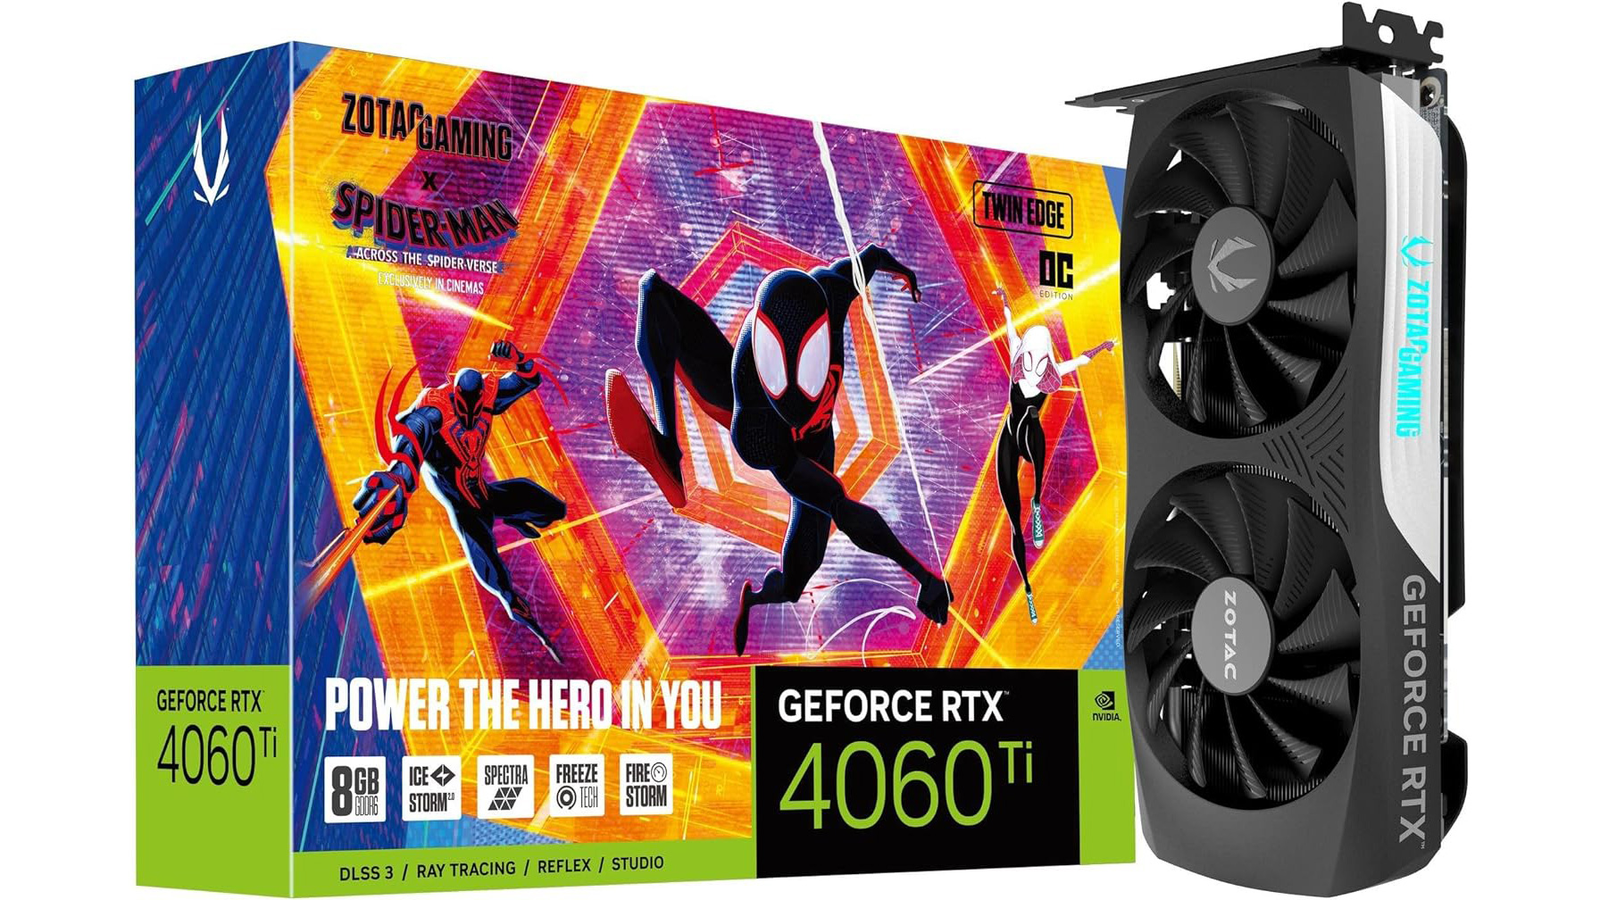 First GeForce RTX 4060 Ti 16GB card drops to $430, cheaper than upcoming RX  7700XT - VideoCardz.com : r/nvidia